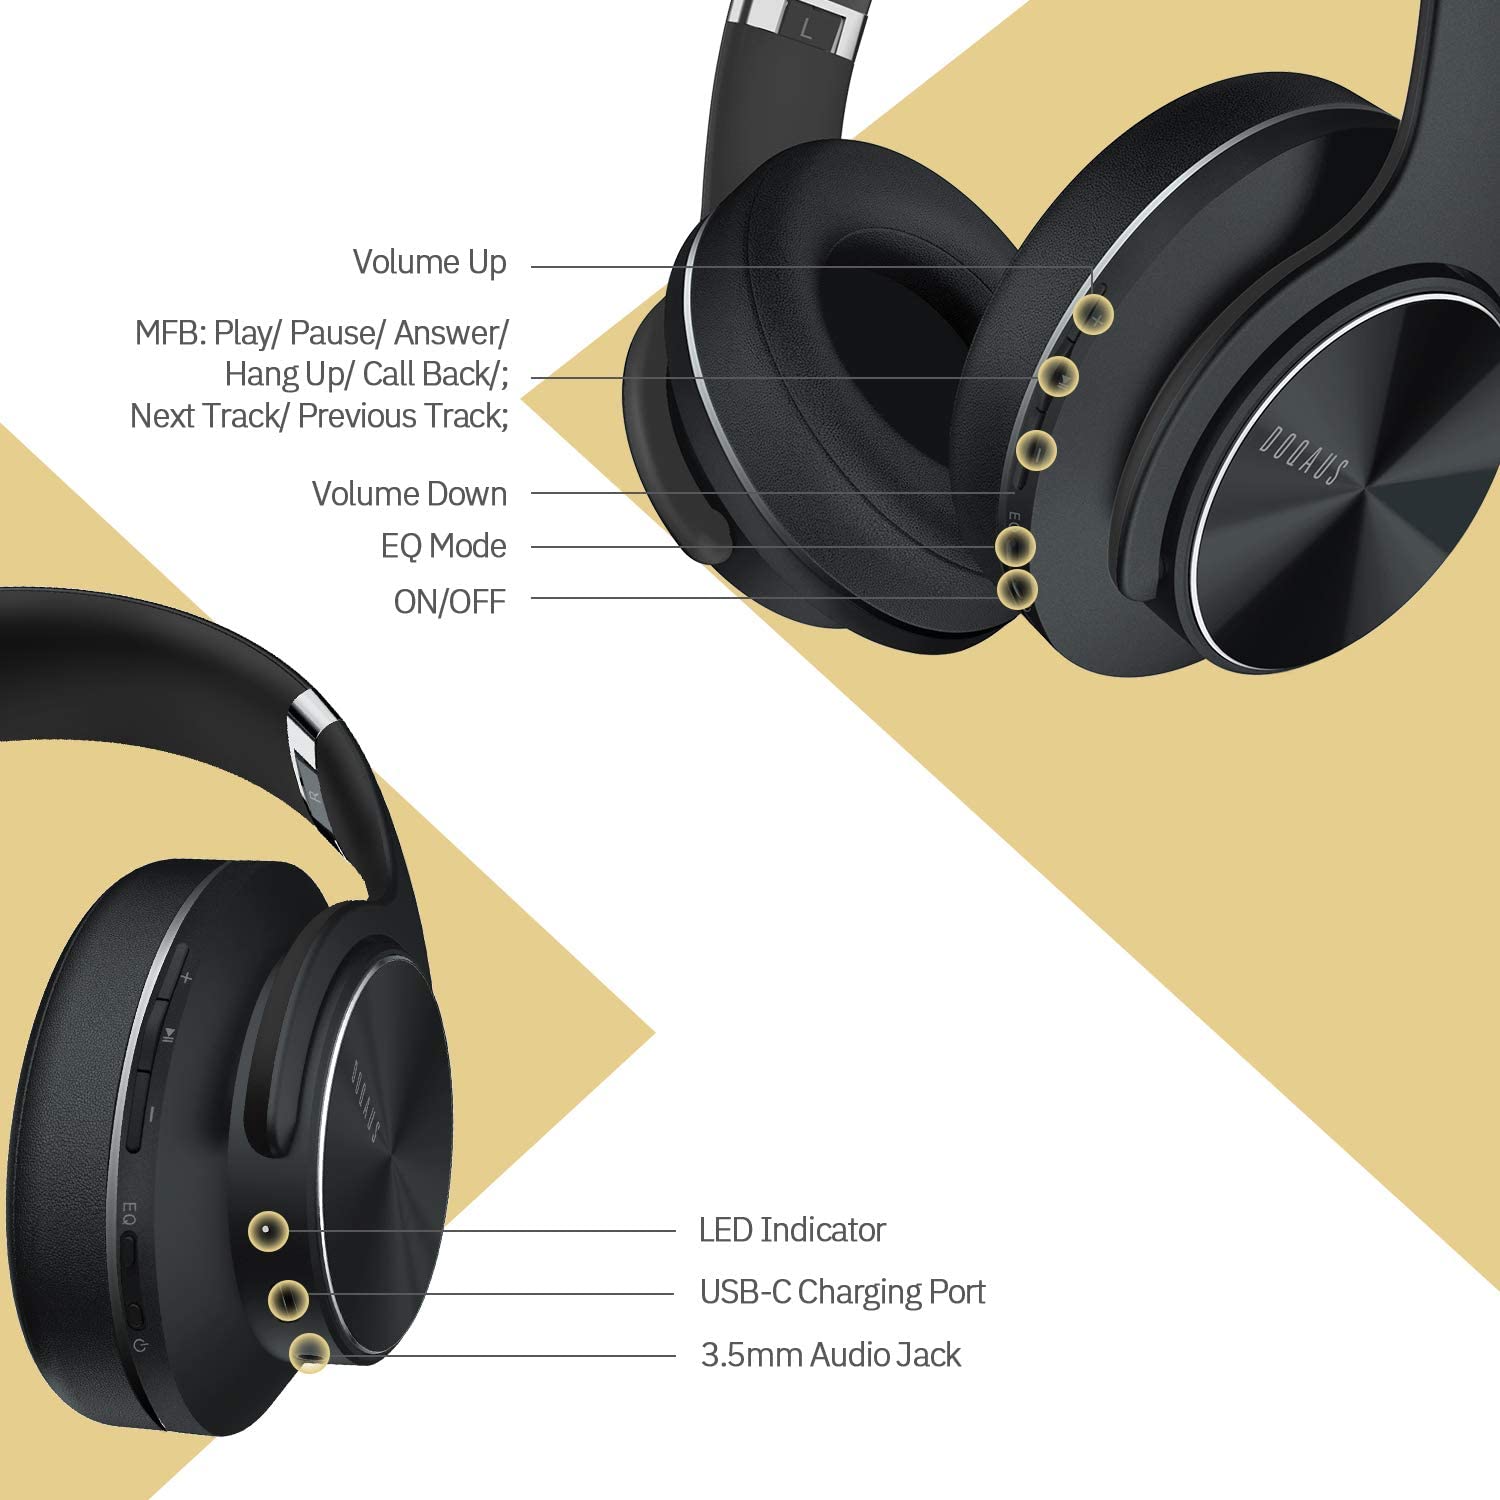 DOQAUS Care 1 Bluetooth Headphones - Black